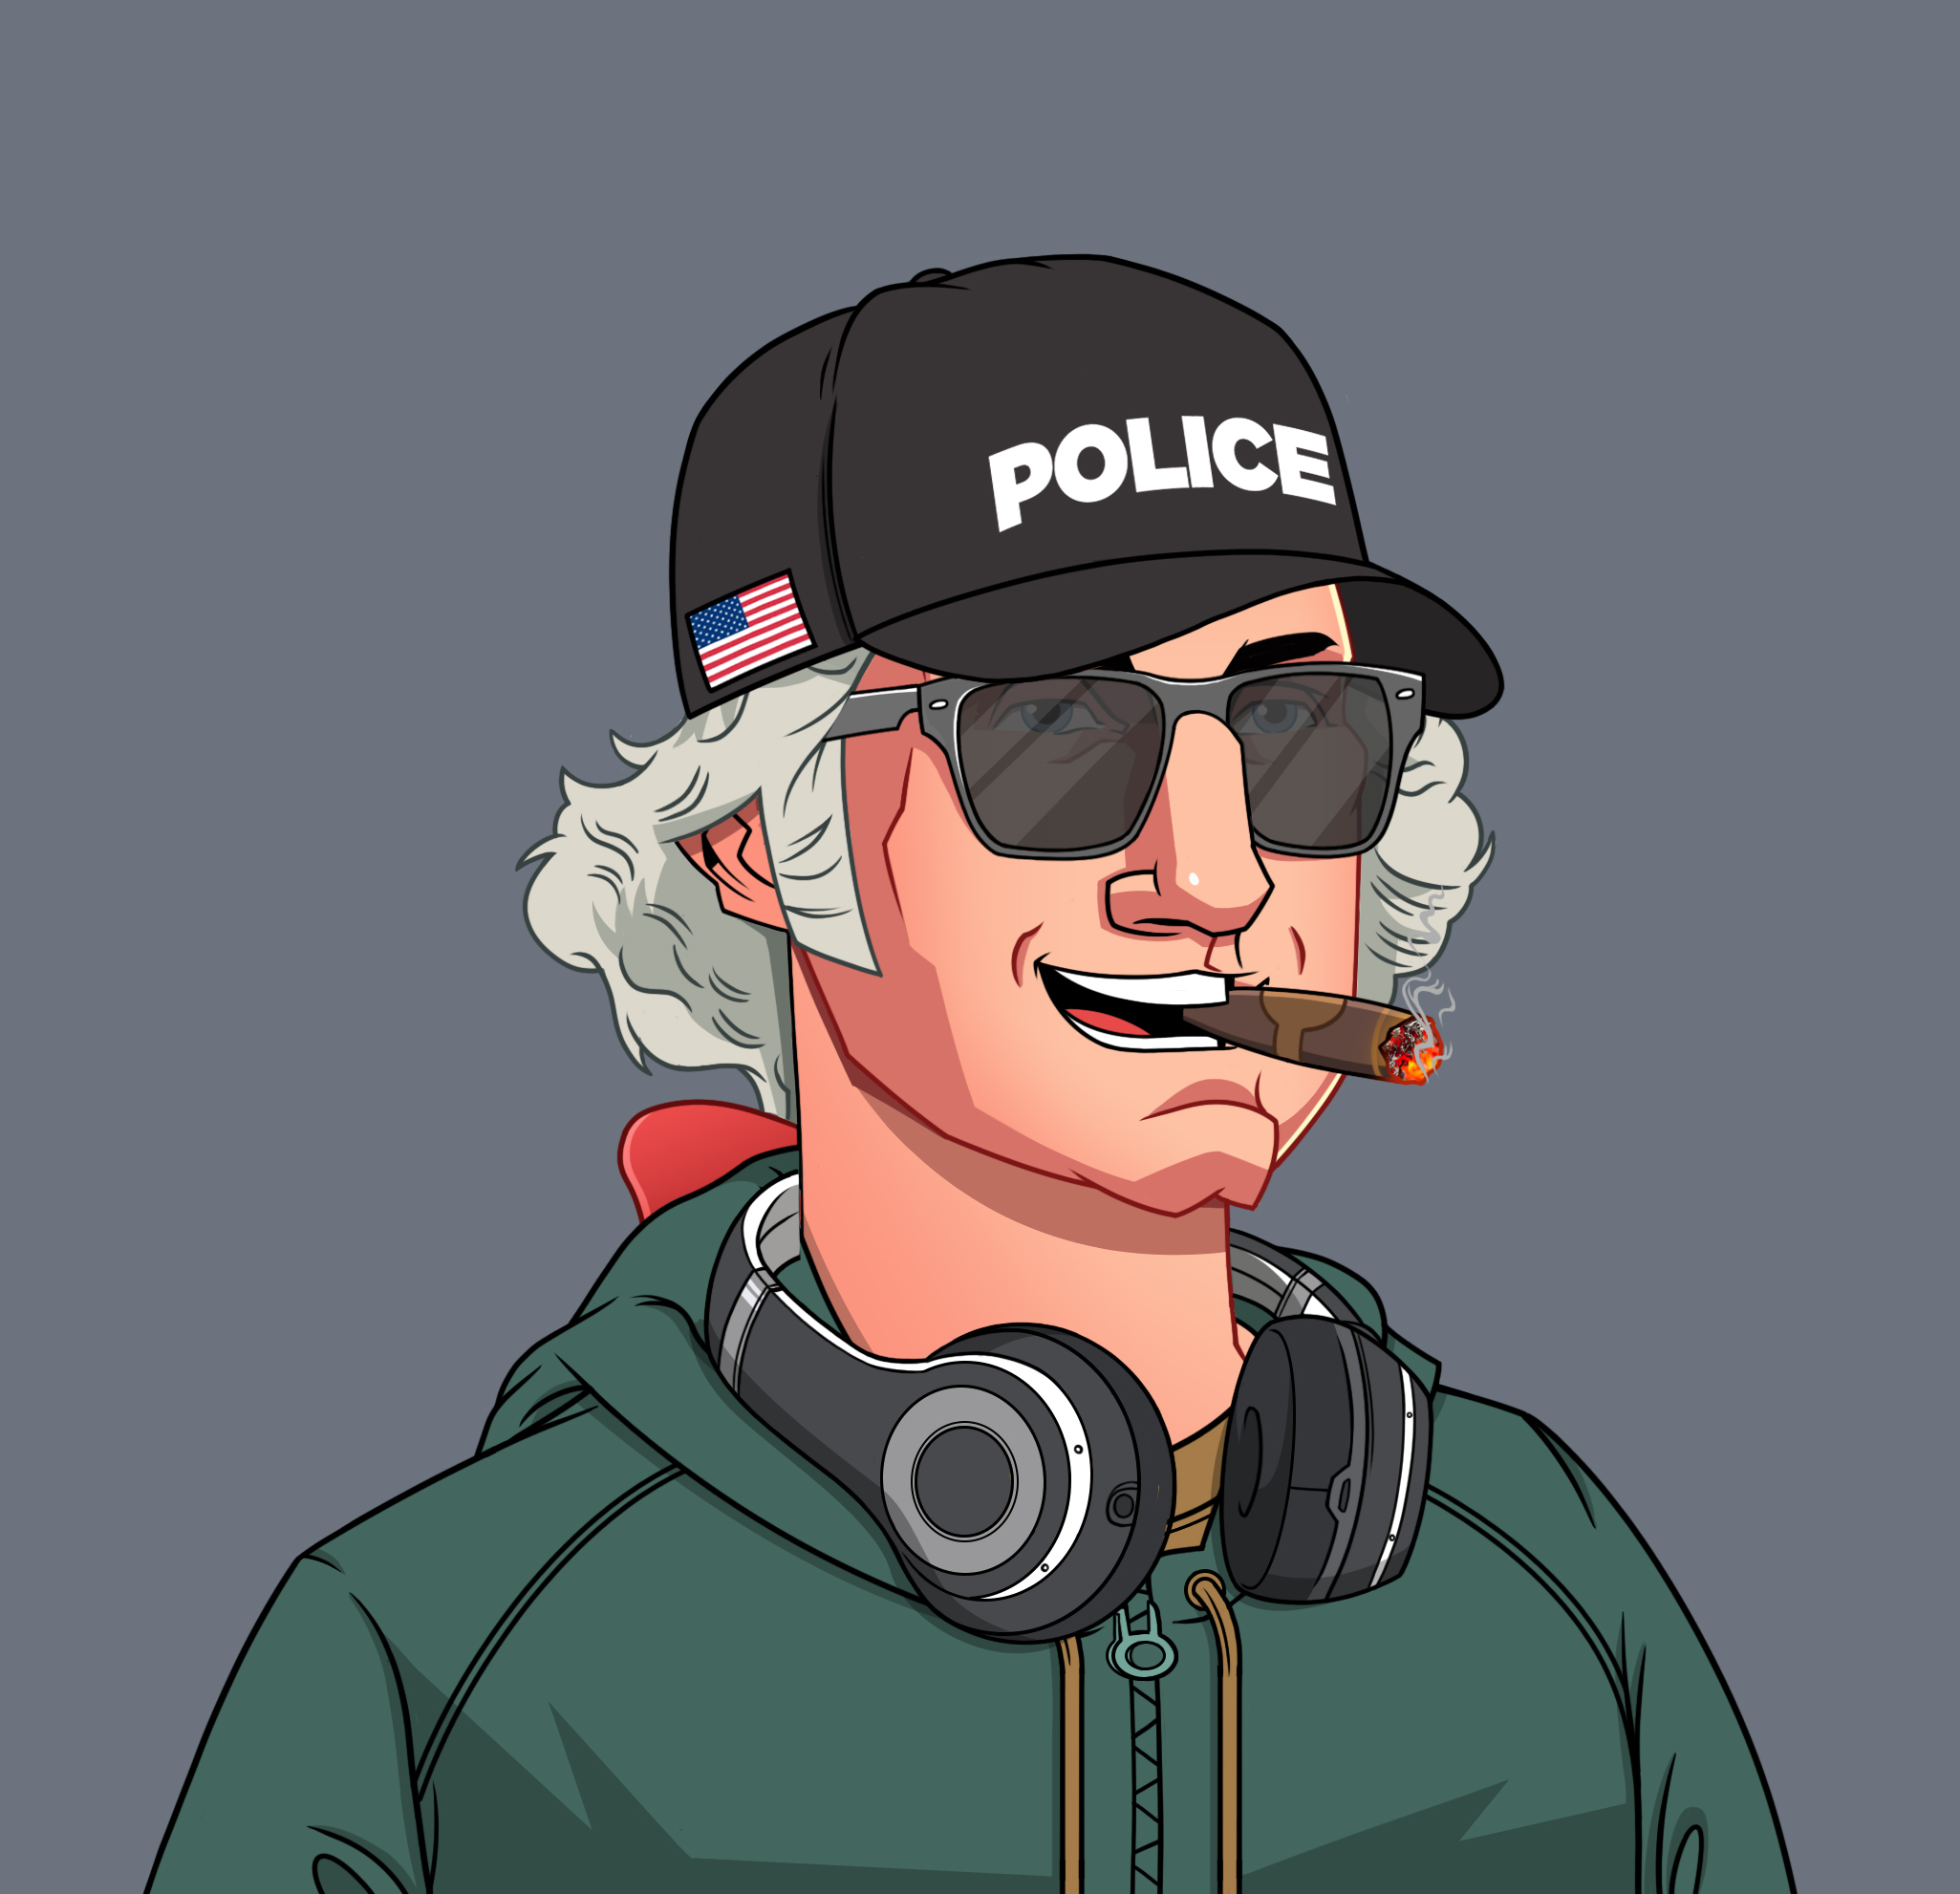 OG George Washington NFT - Smoker Rockstar with Police Hat